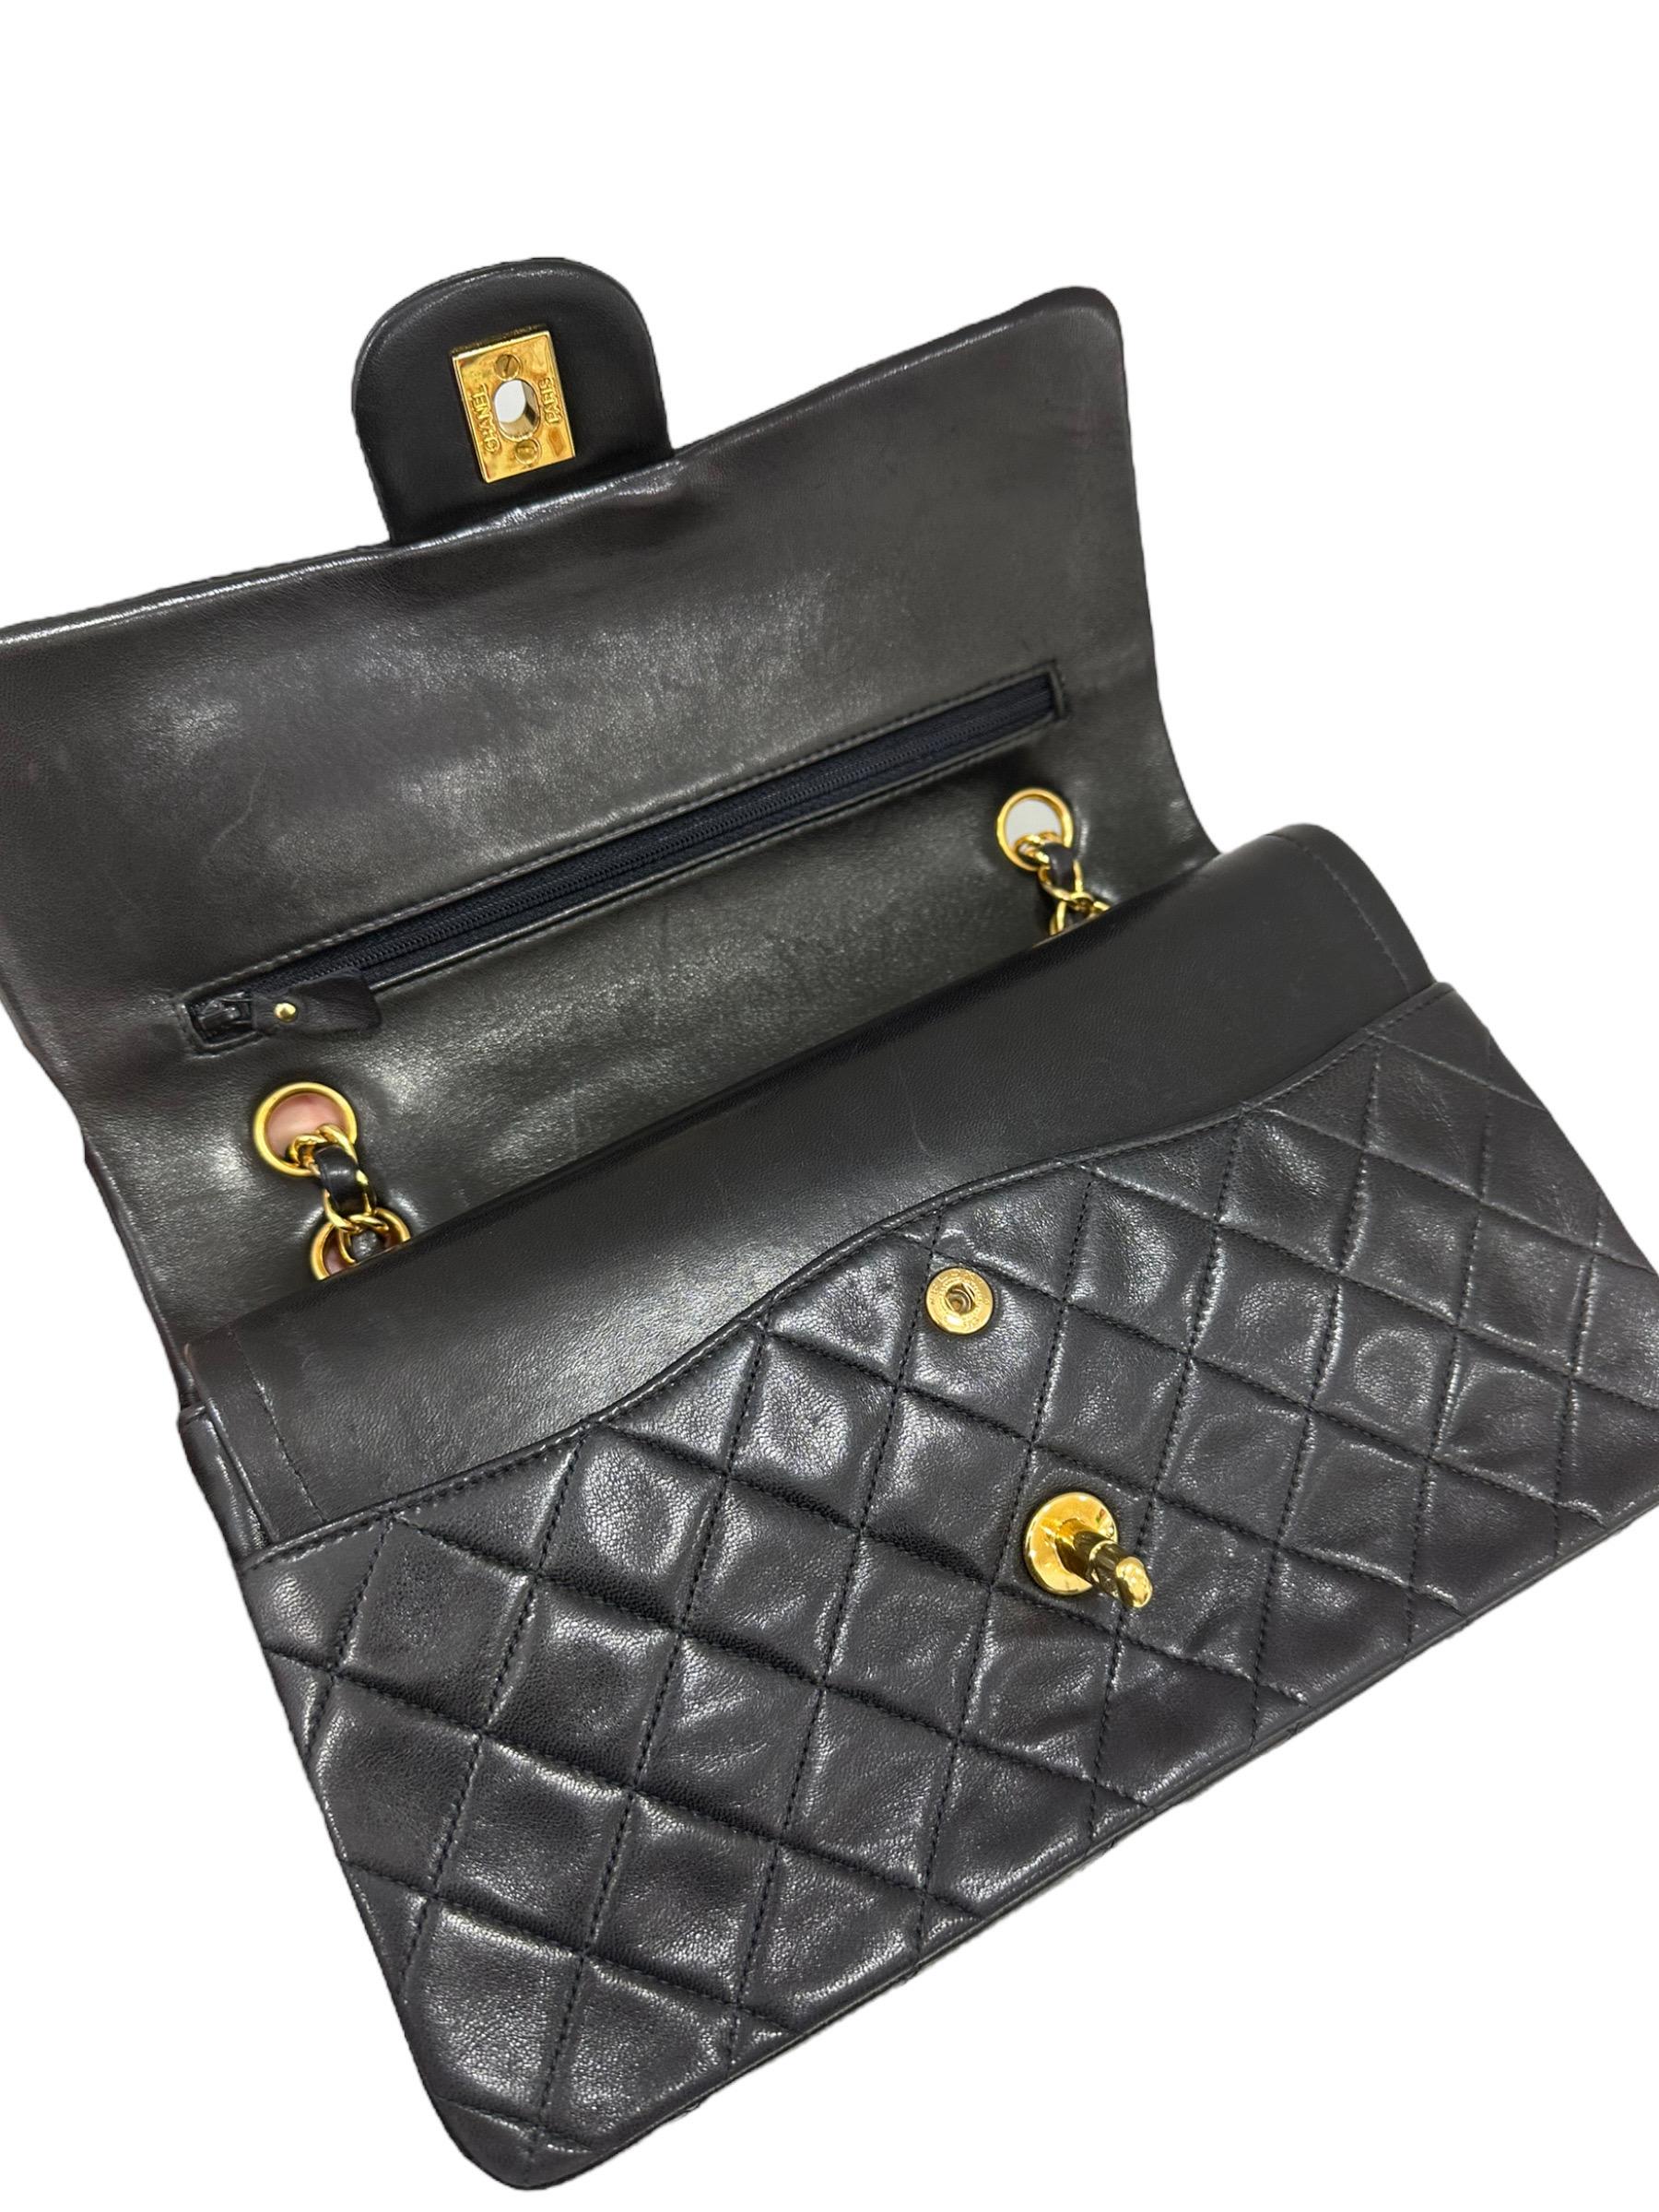 1996 Chanel Timeless Classic 2.55 Black Leather Top Shoulder Bag For Sale 13